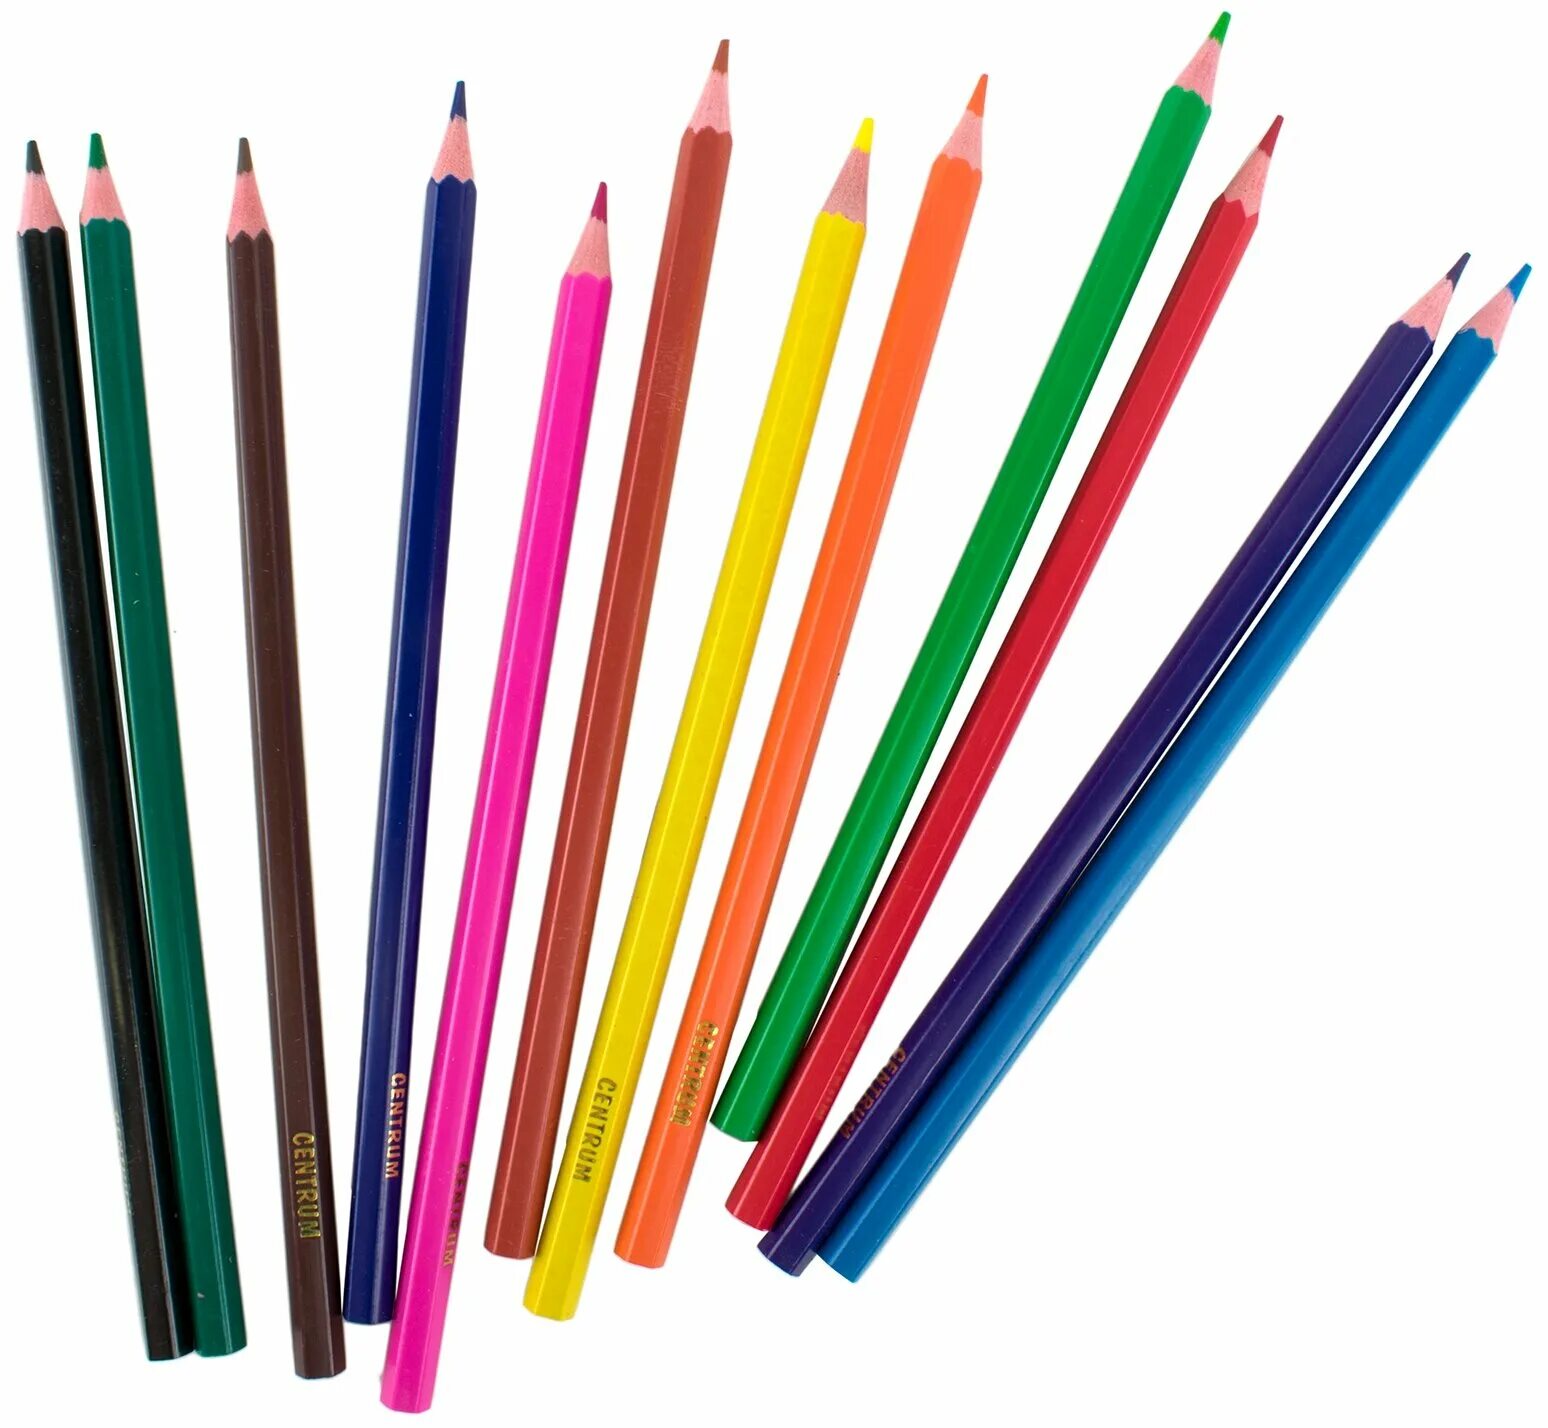 Ten pencils. Карандаши Центрум. Карандаши цветные 12 цветов. Цвета карандашей 12 цветов. Цветные карандаши Centrum.